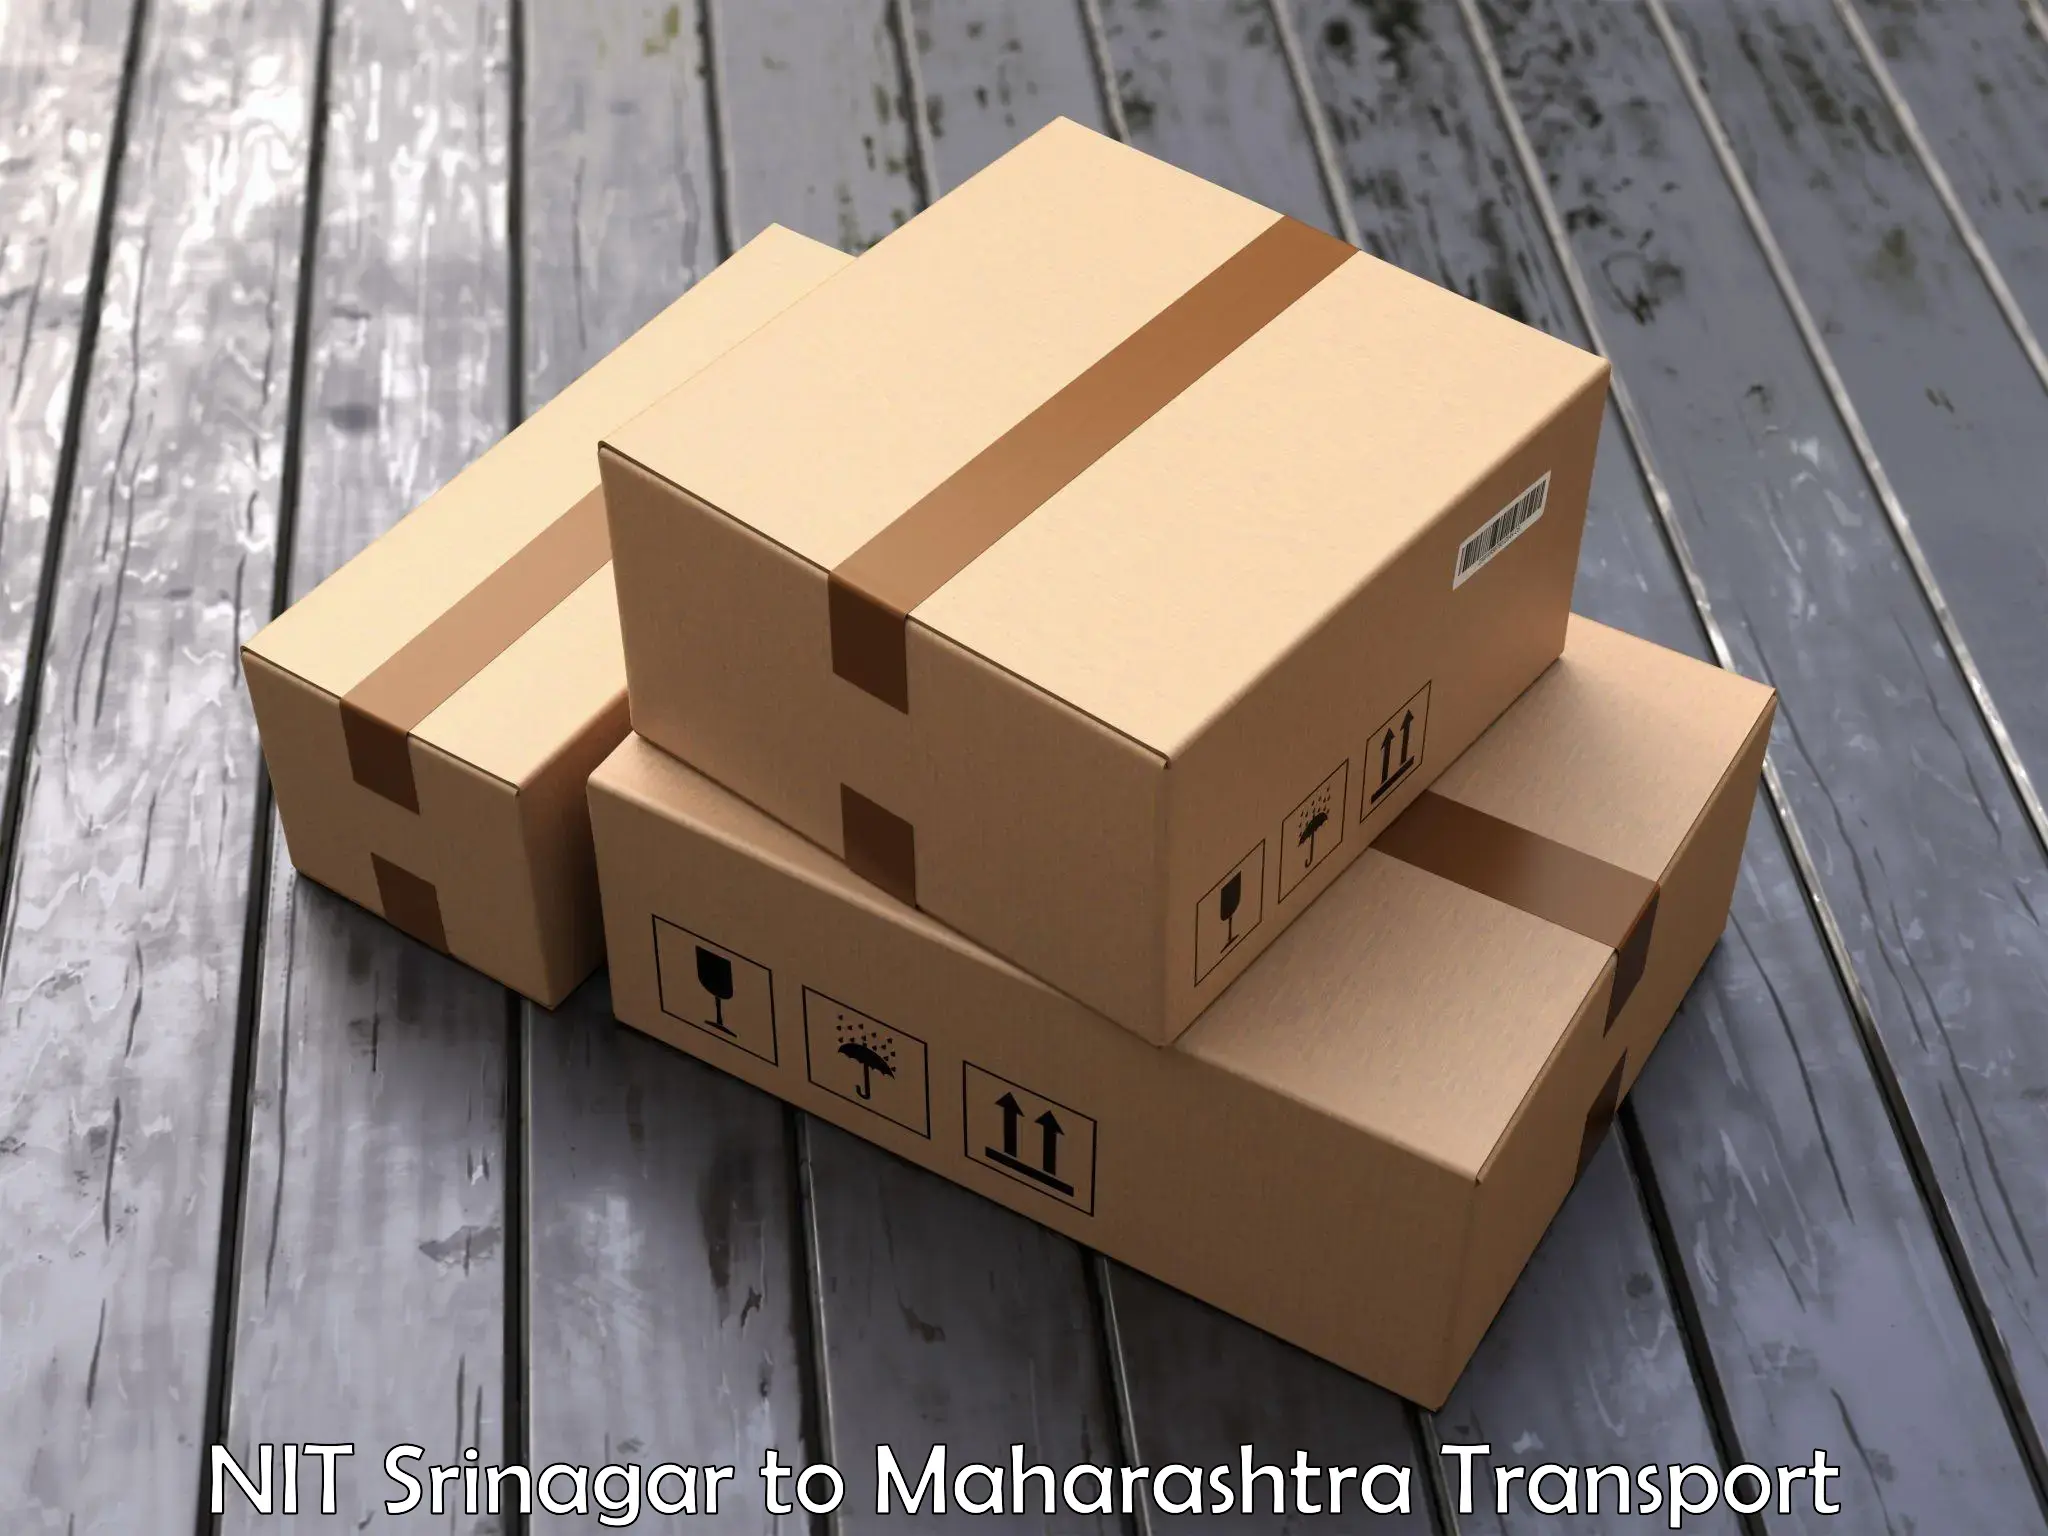 Vehicle transport services in NIT Srinagar to Raigarh Maharashtra